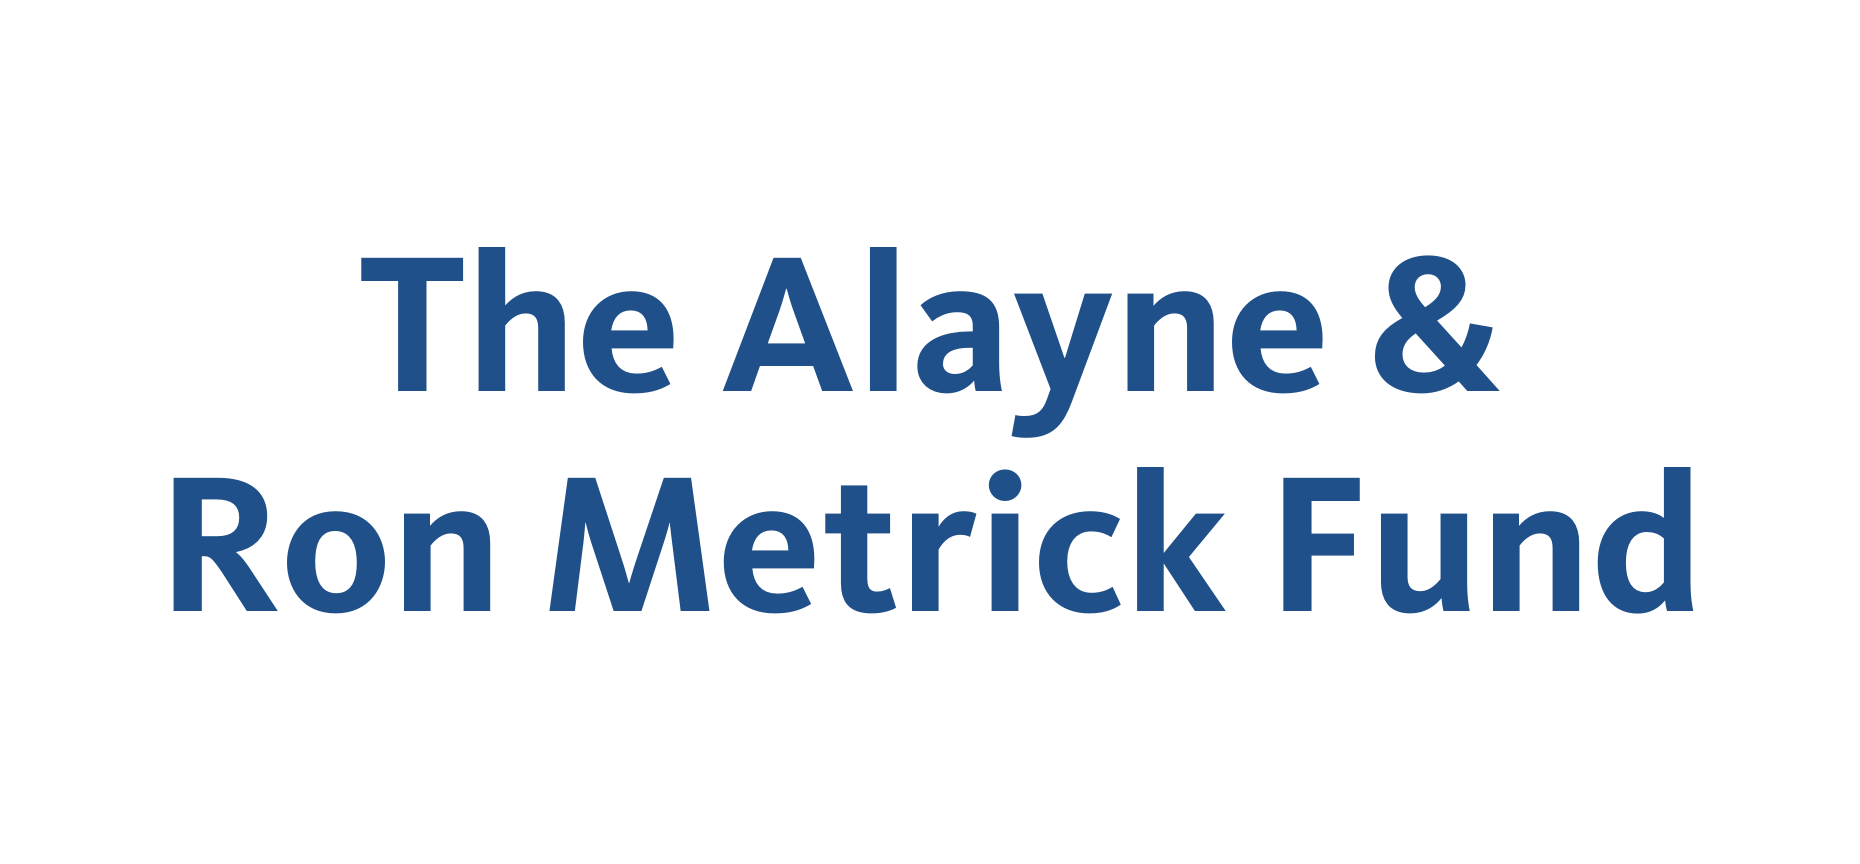 The Alayne & Ron Metrick Fund